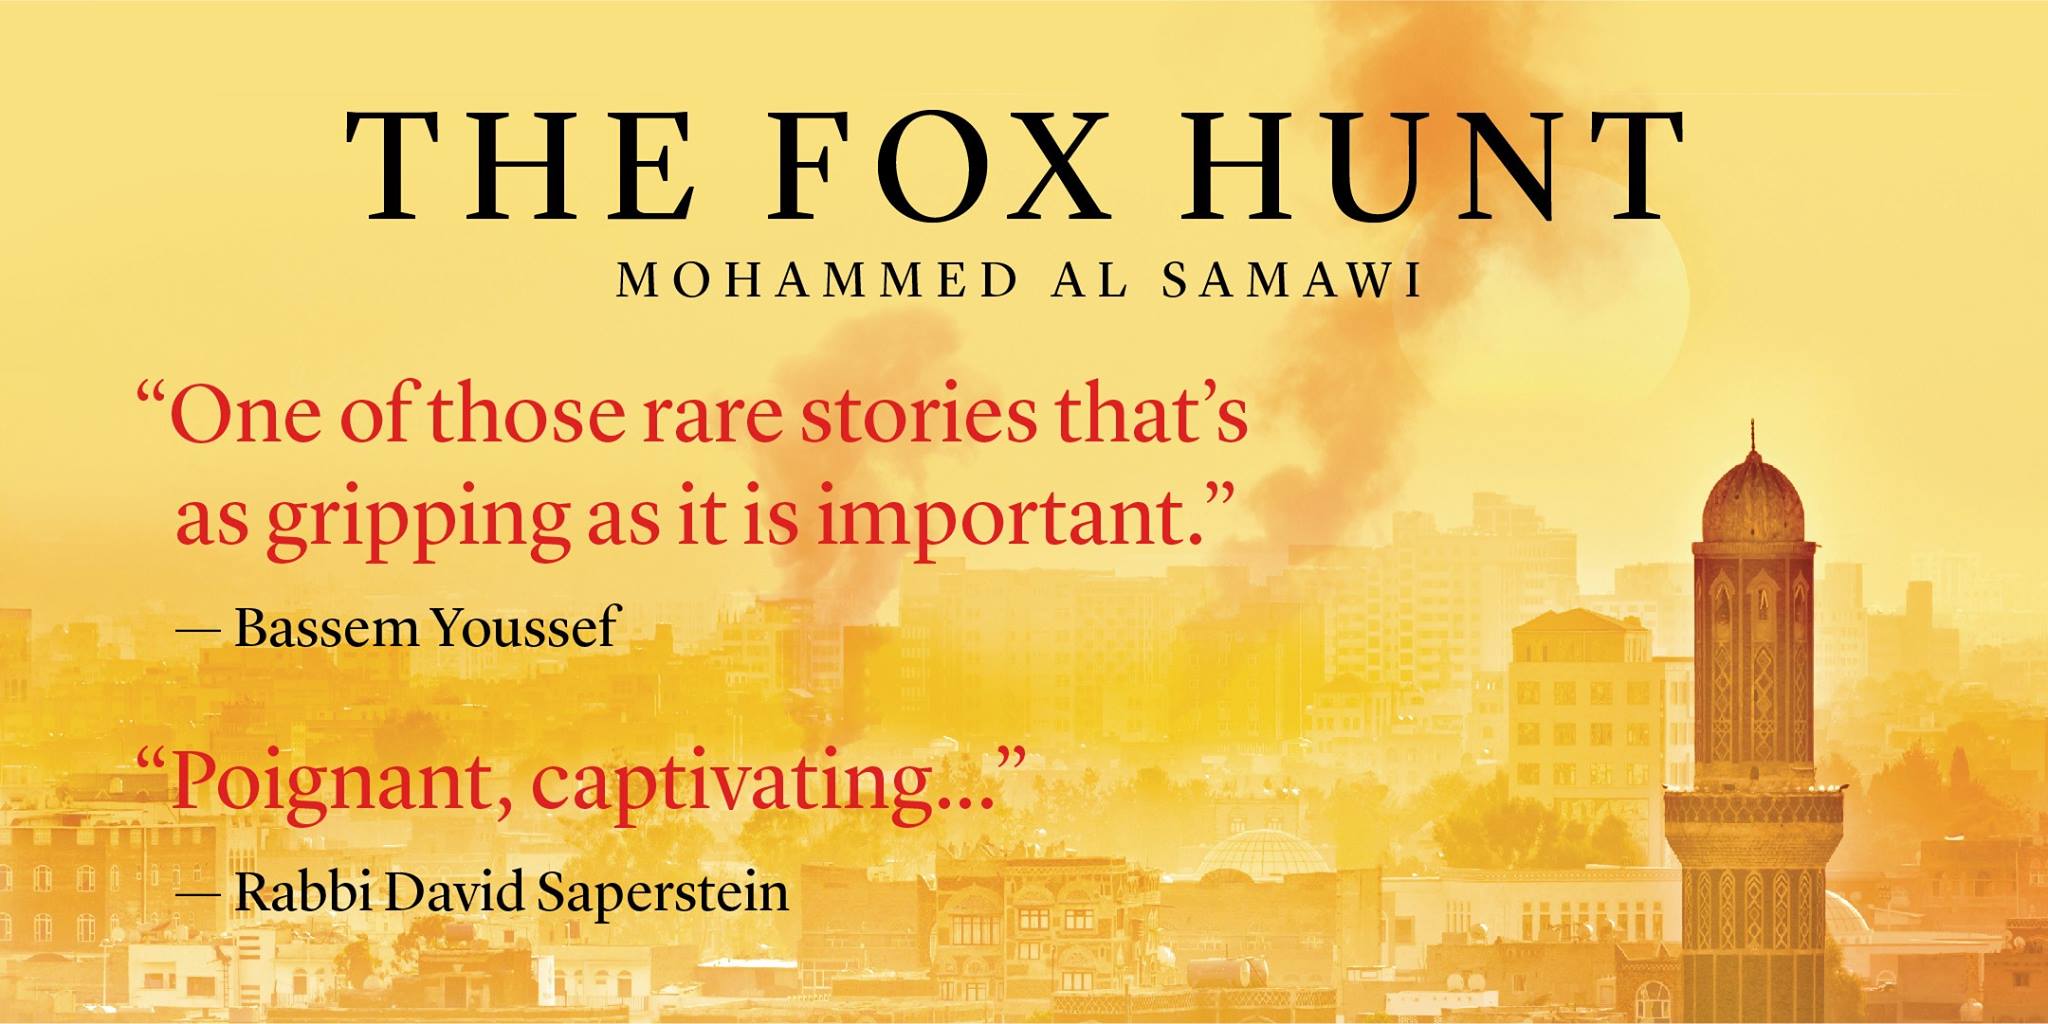 The Fox Hunt — Flyer